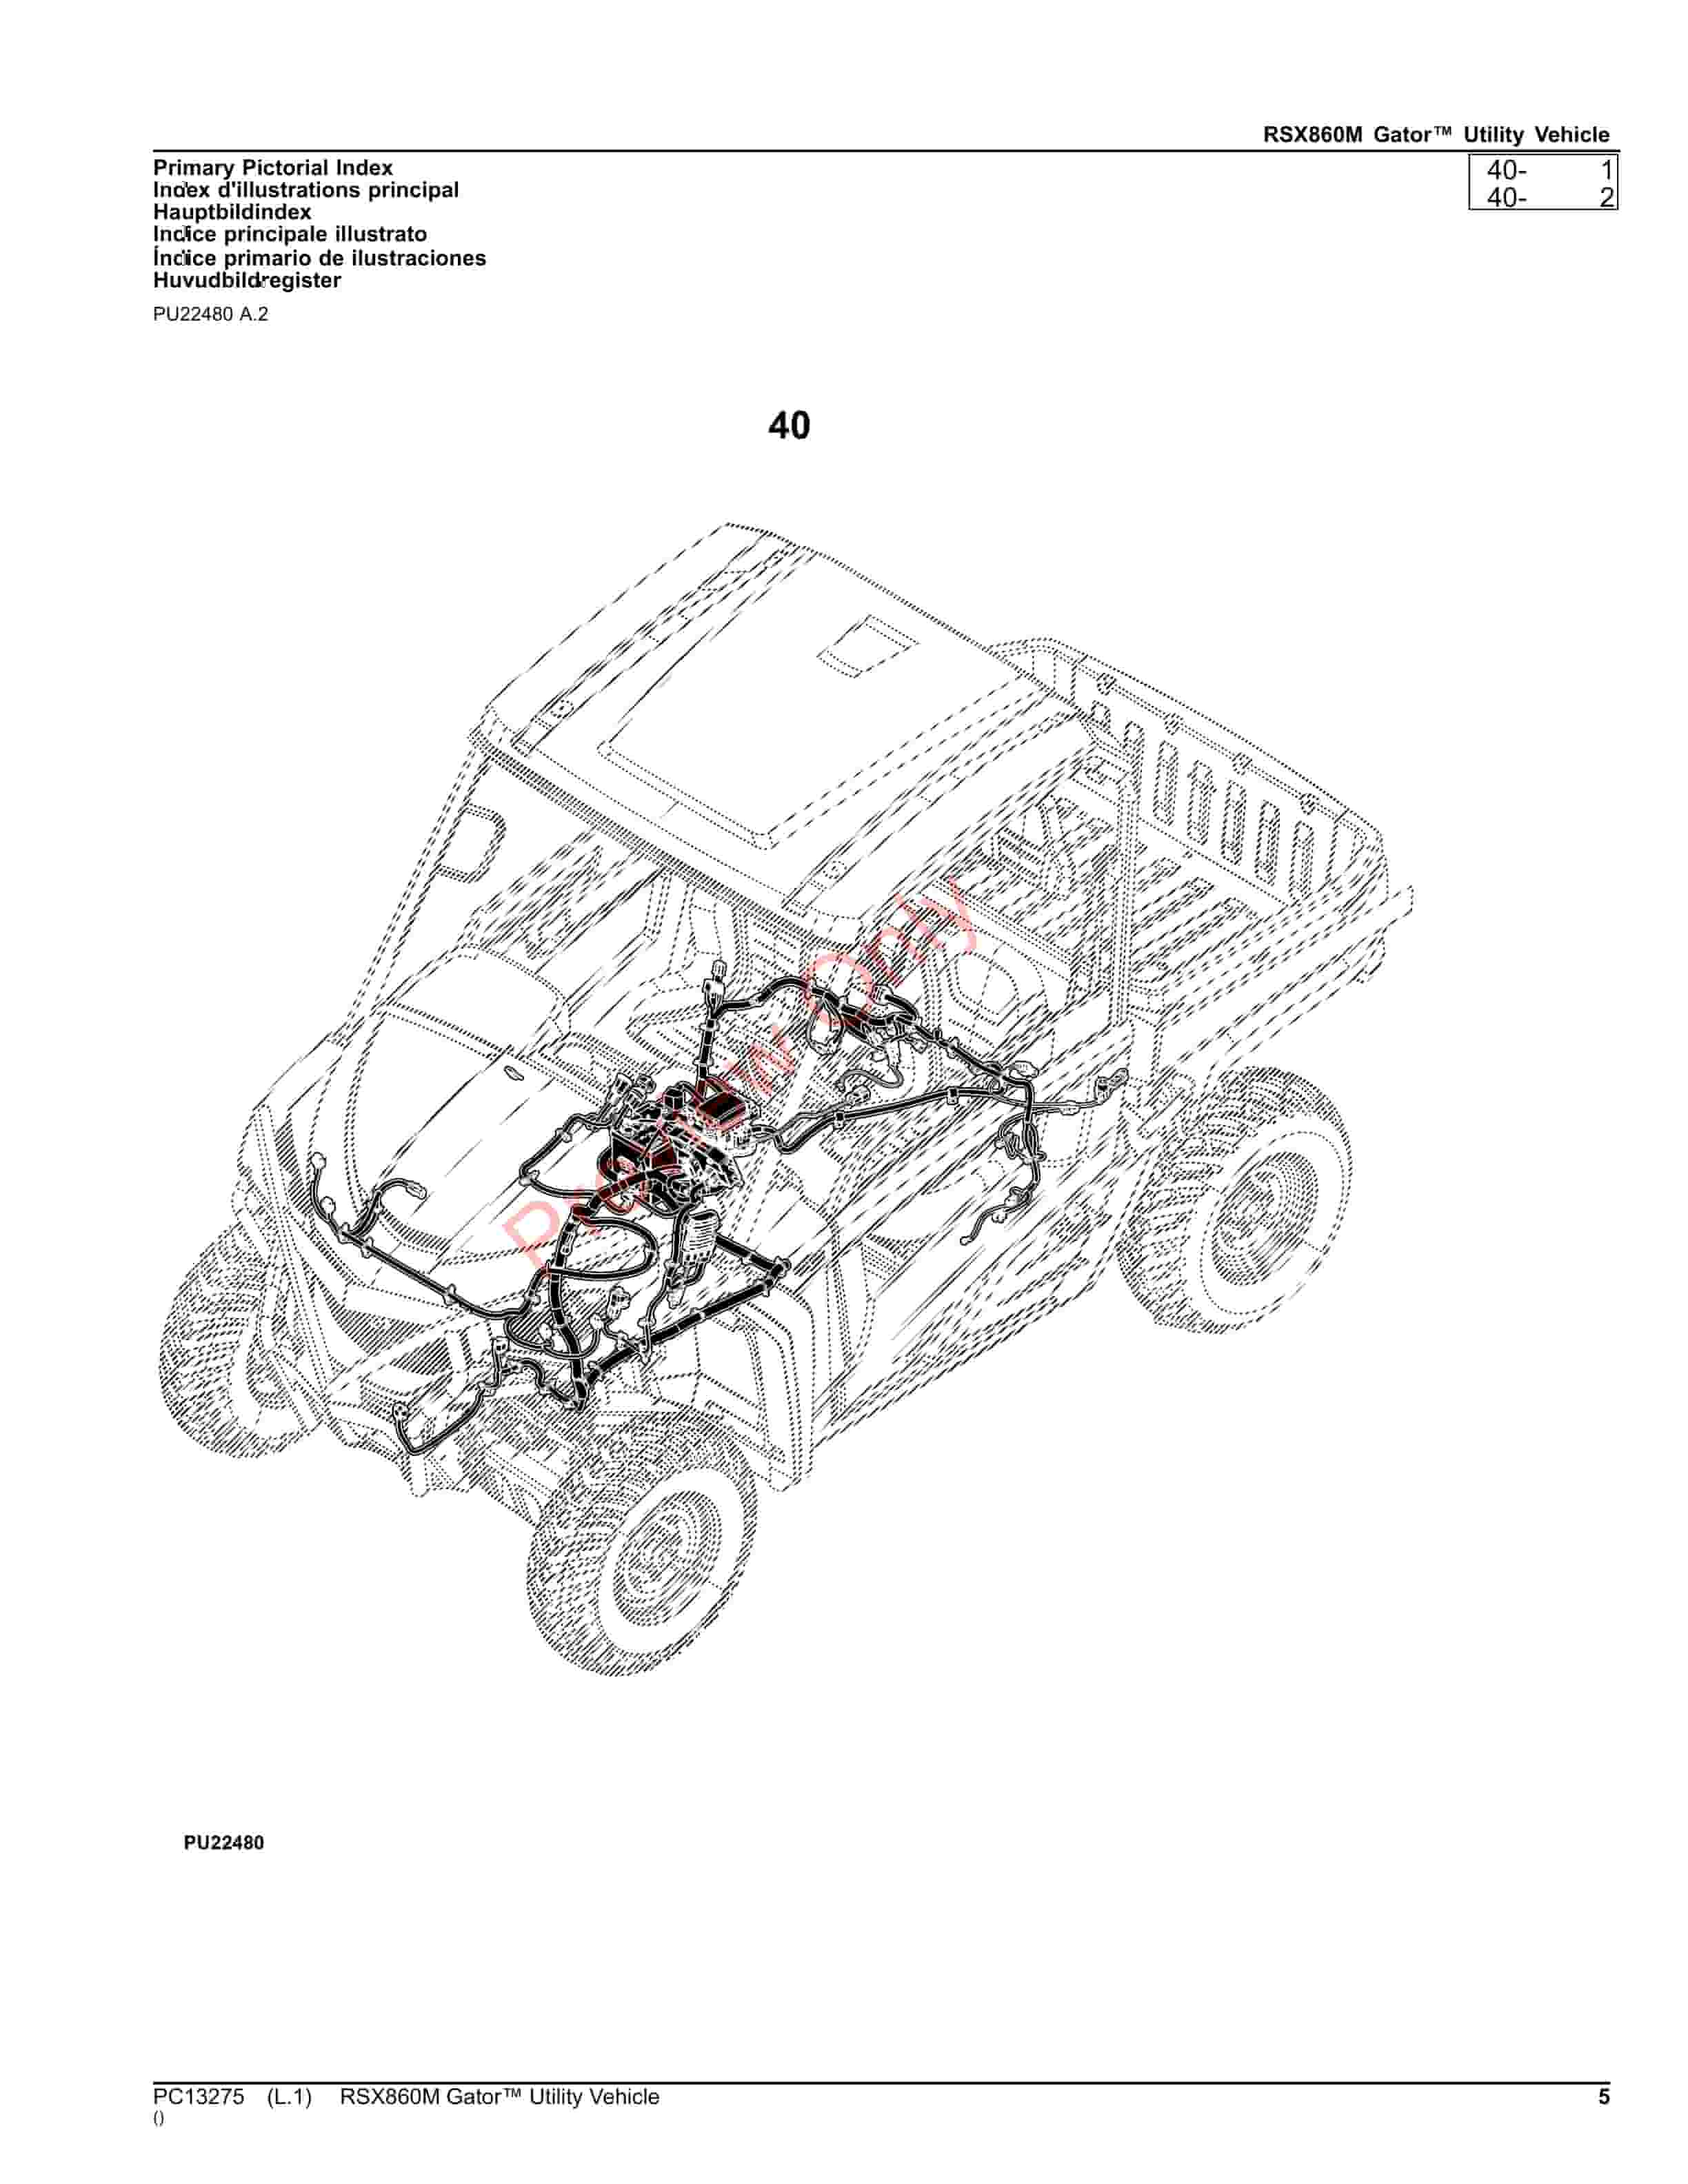 John Deere RSX860M Gator Utility Vehicle Parts Catalog PC13275 14SEP23-5